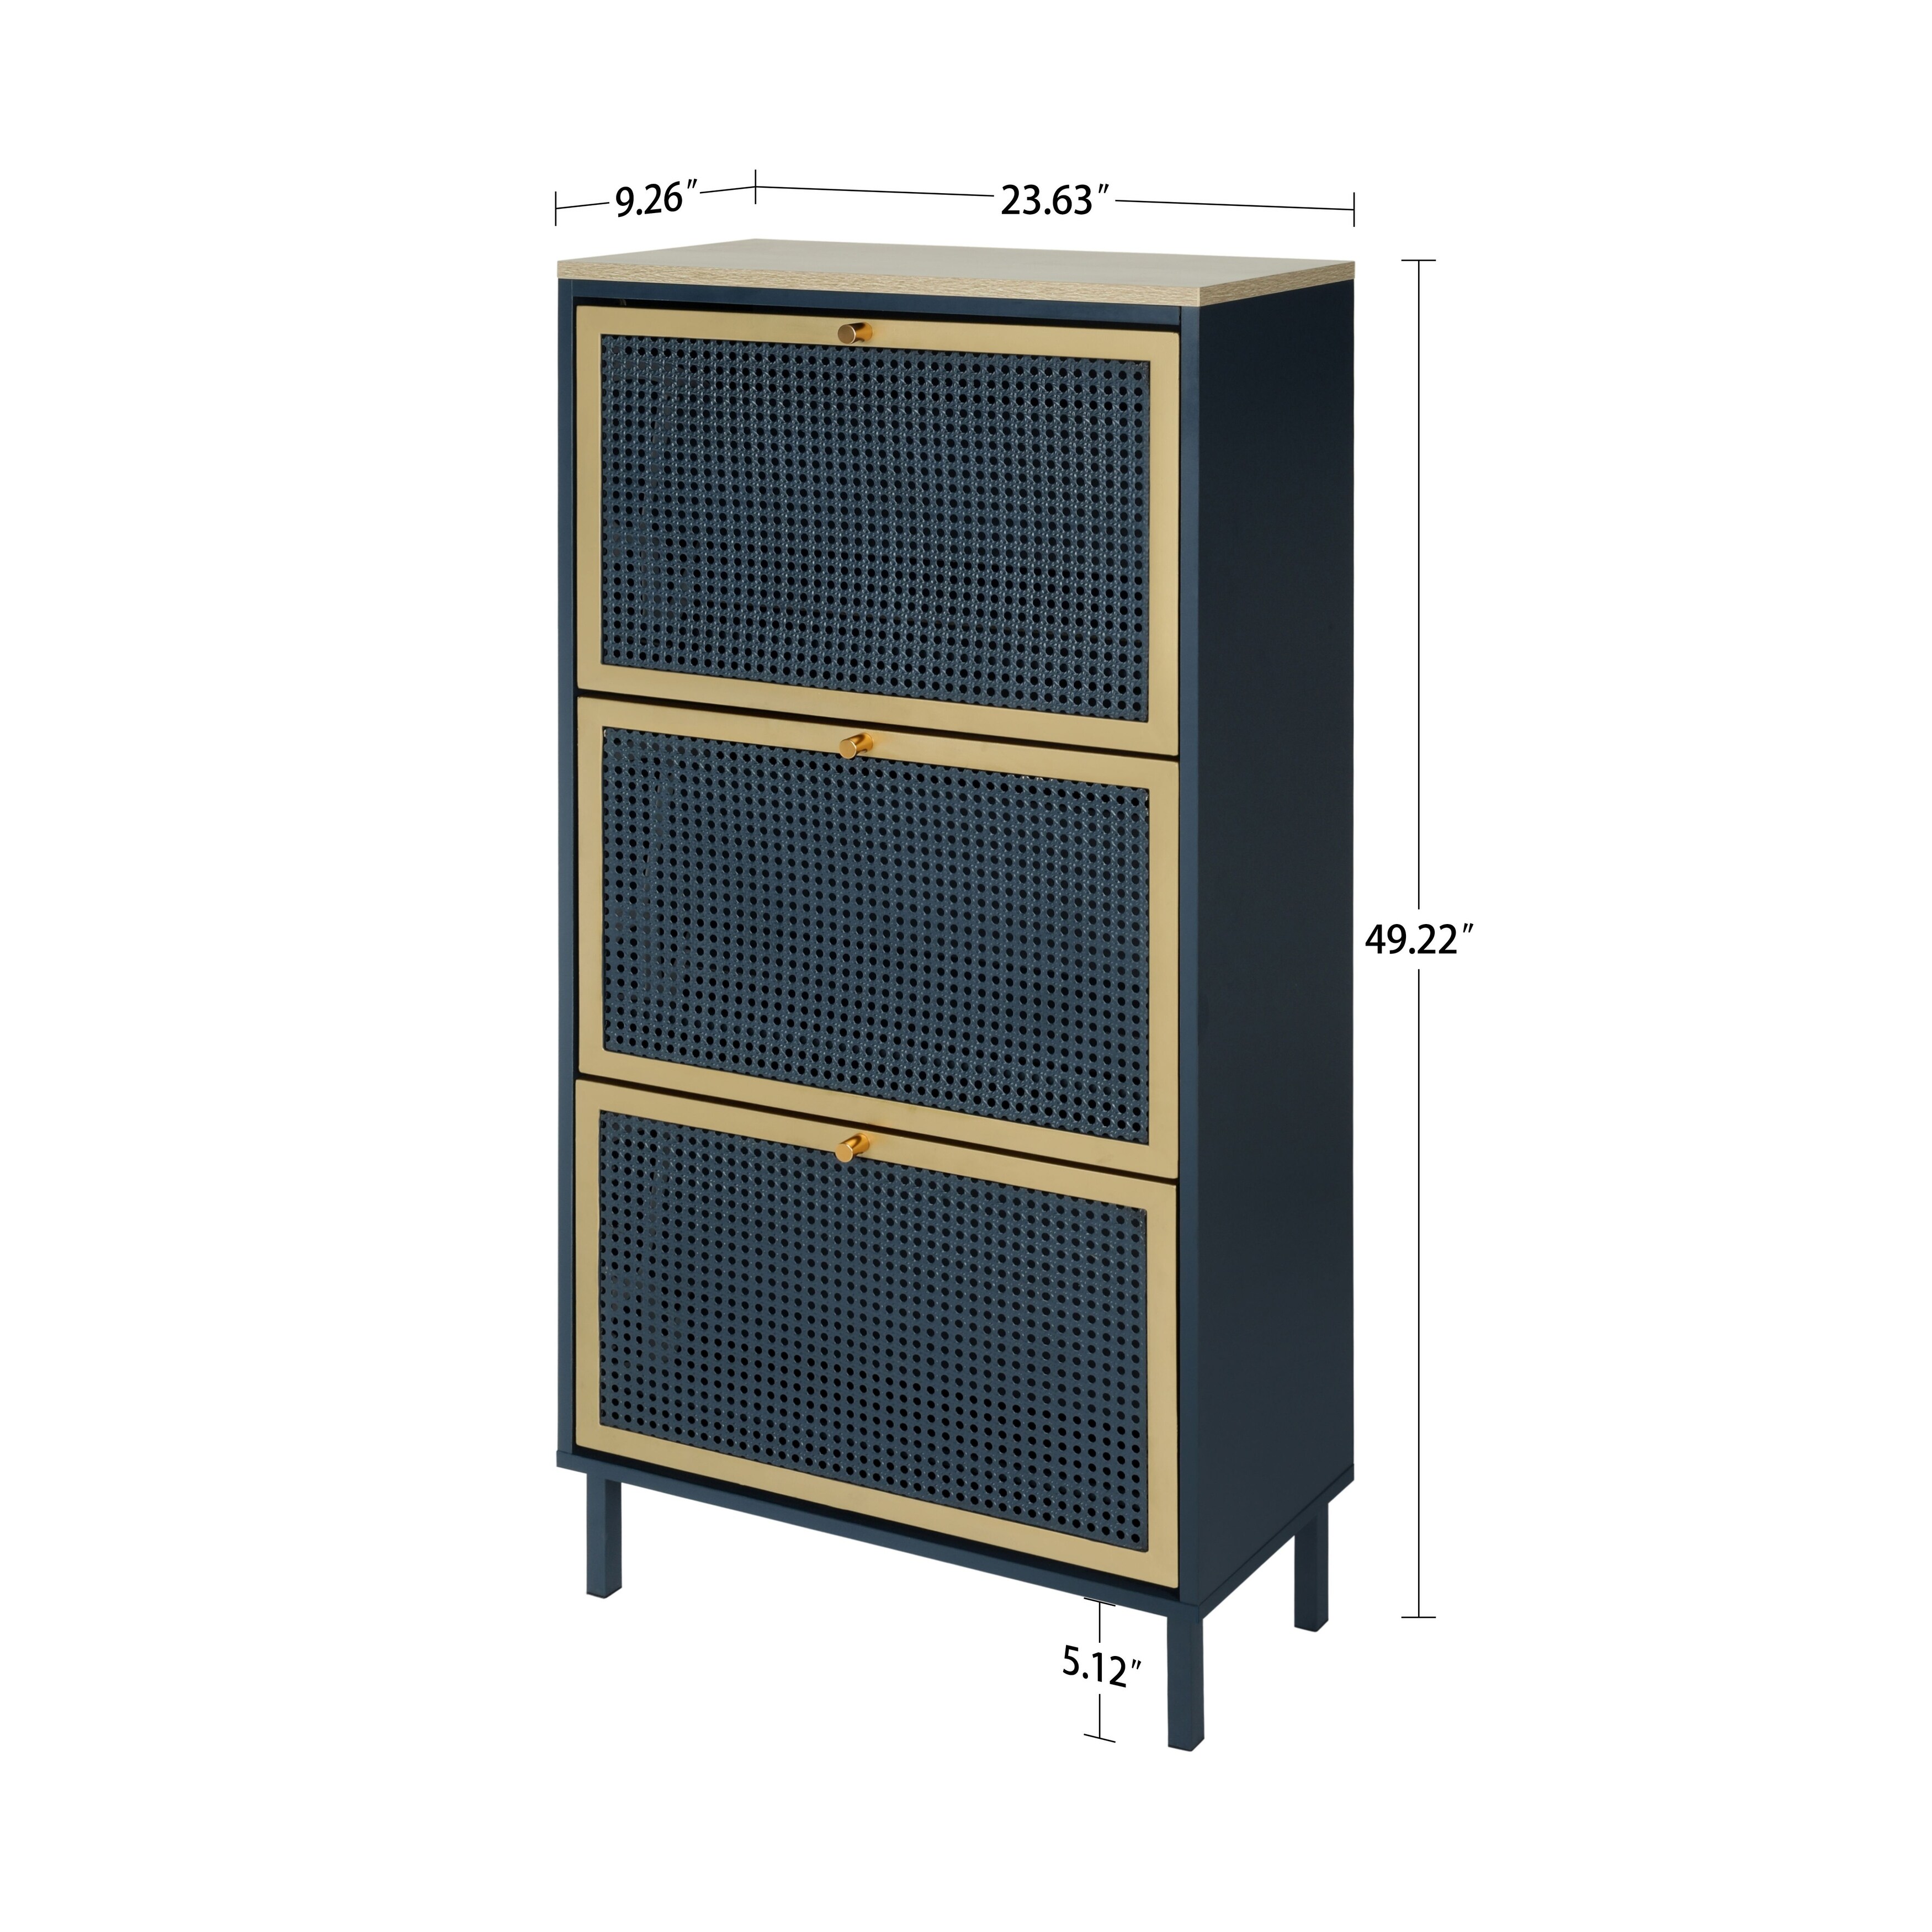 https://ak1.ostkcdn.com/images/products/is/images/direct/d4c4e34b34b03ae8d50179bfa34aabfd0789340a/3-Metal-Door-Shoe-Rack%2C-Freestanding-Modern-Shoe-Storage-Cabinet.jpg